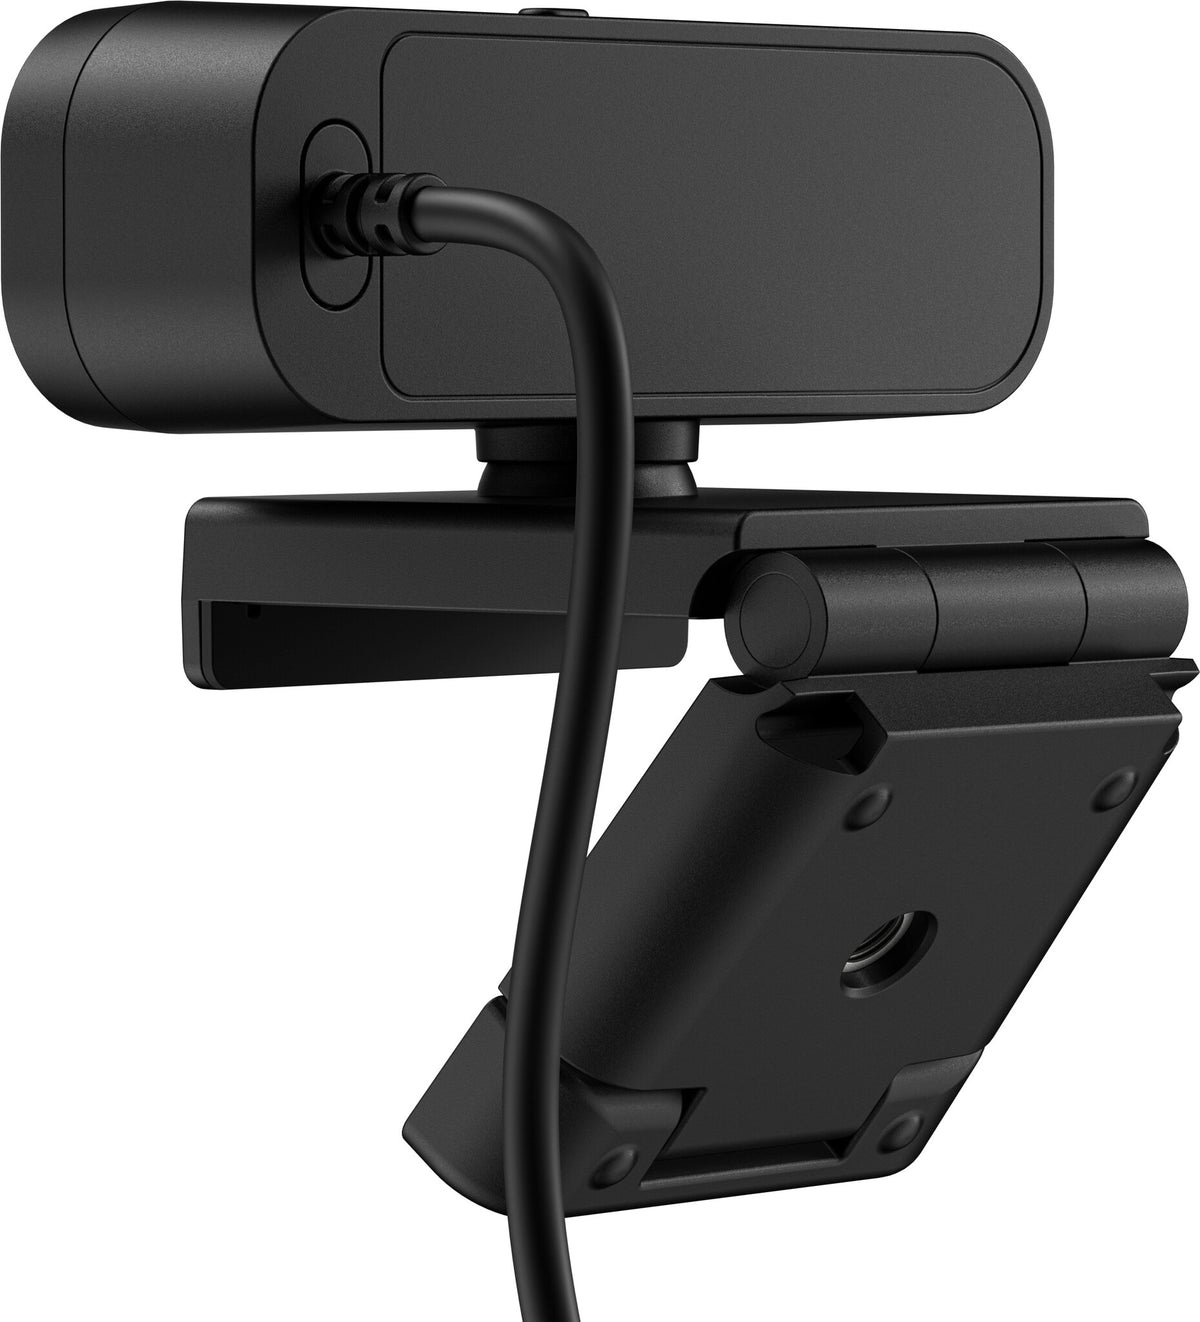 HP 435 - 2MP 1920 x 1080p webcam in Black